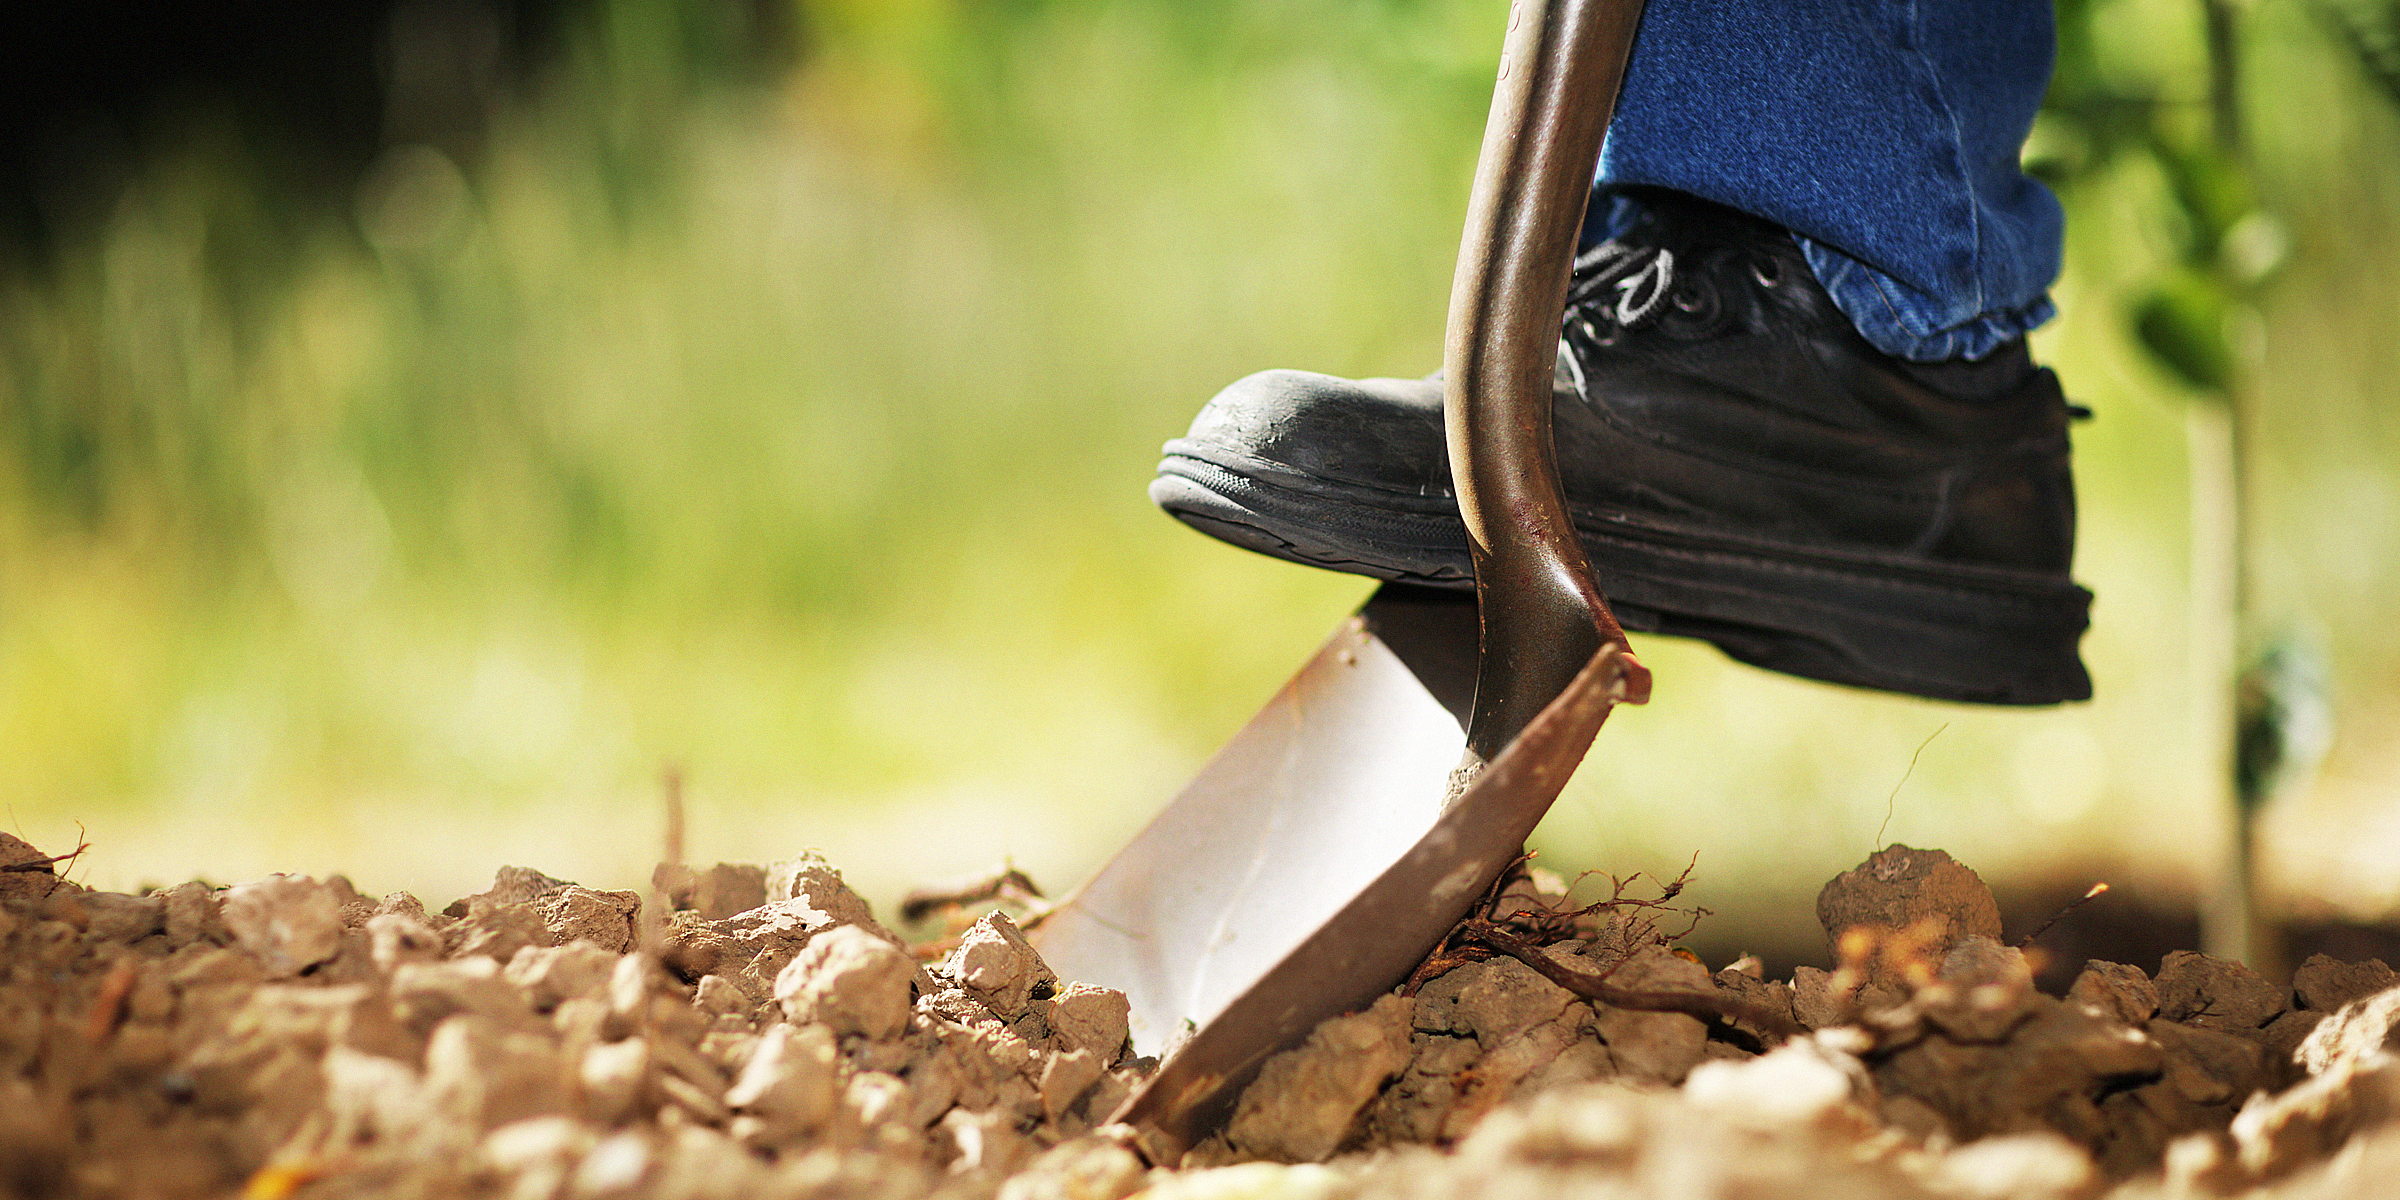 Persona cavando la tierra | Foto: Shutterstock